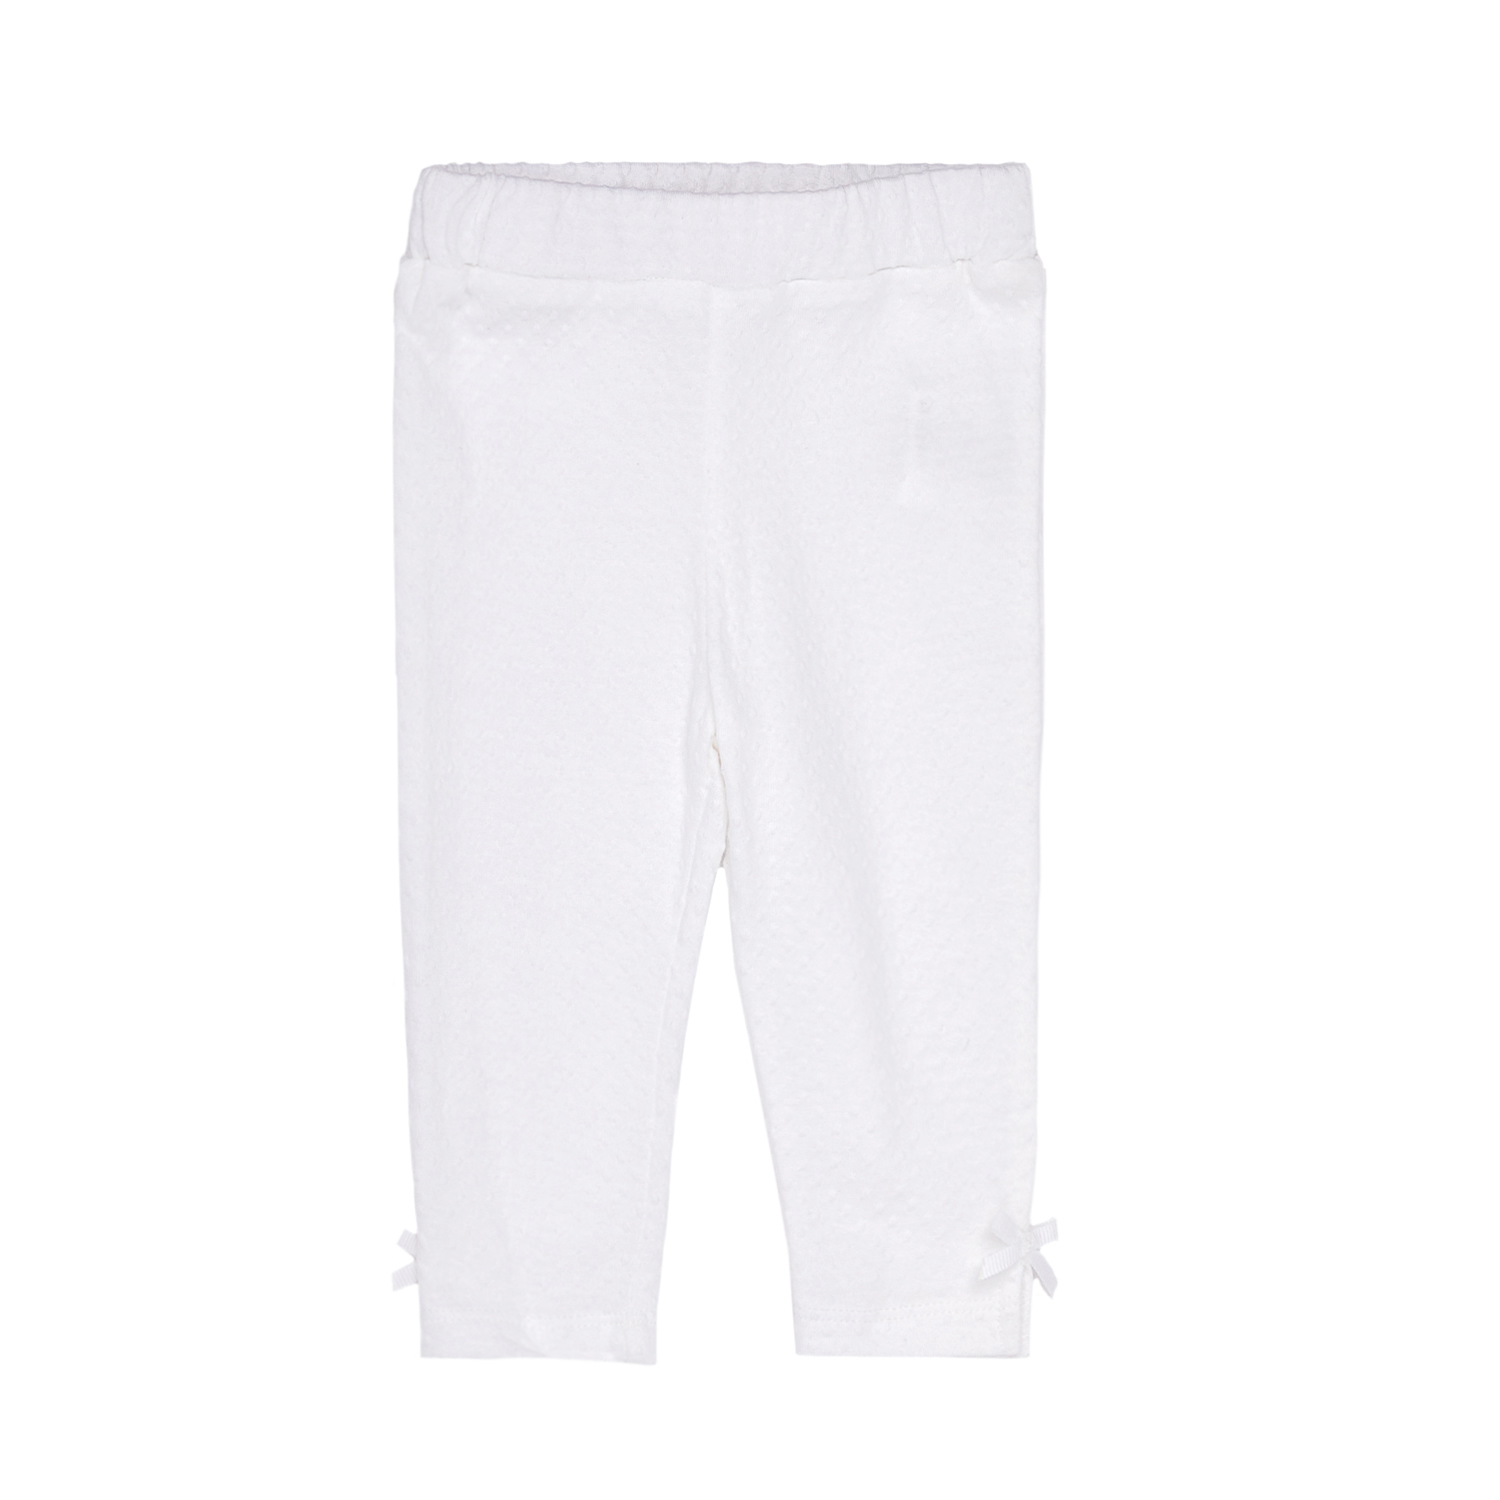 PATACHOU - Βρεφικό κολάν PATACHOU άσπρο Παιδικά/Baby/Ρούχα/Παντελόνια